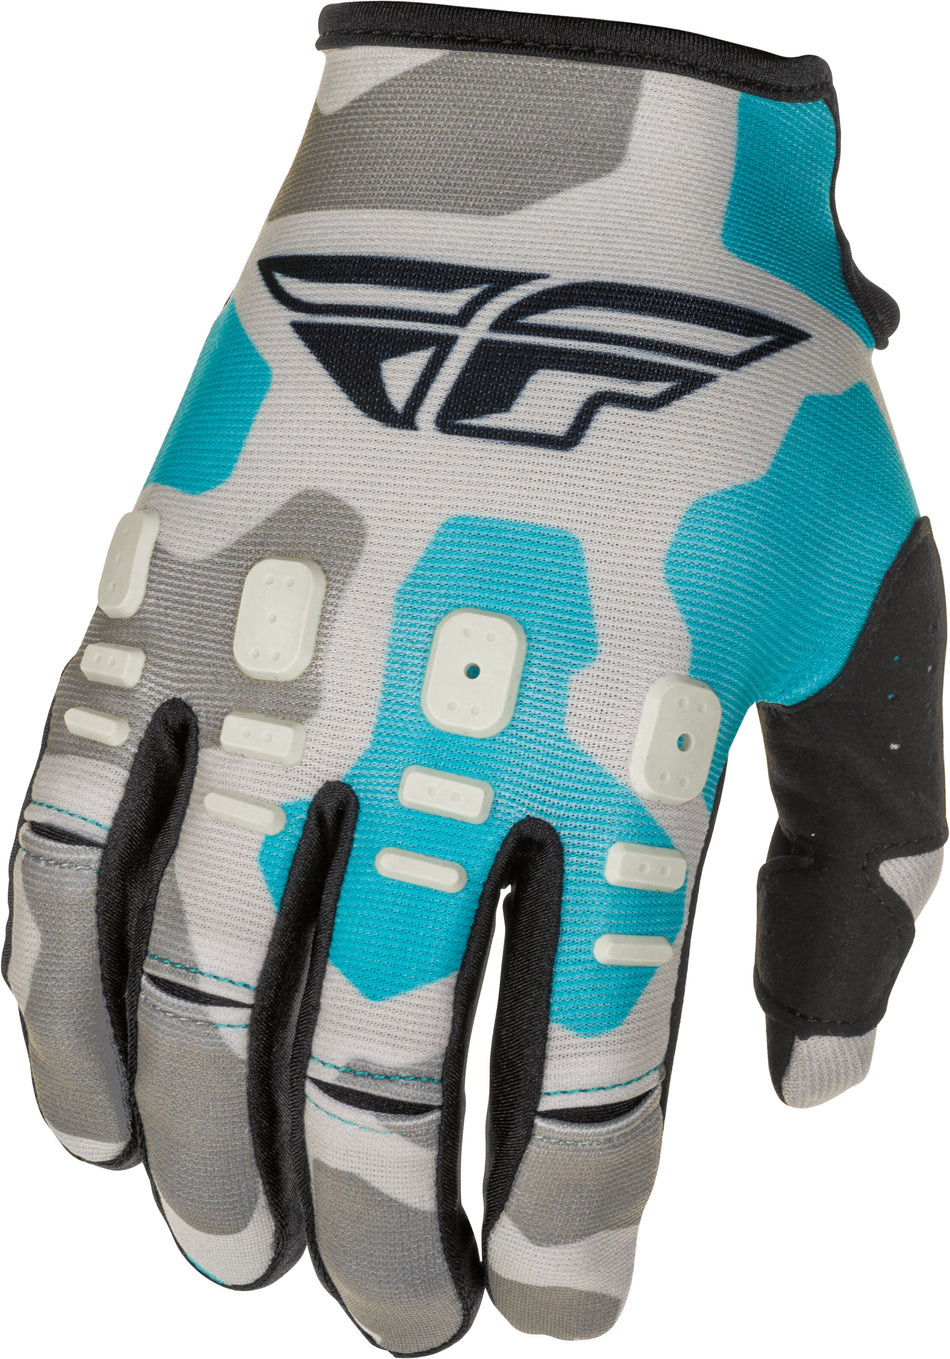 FLY RACING Kinetic K221 Gloves Grey/Blue Sz 10 374-51610